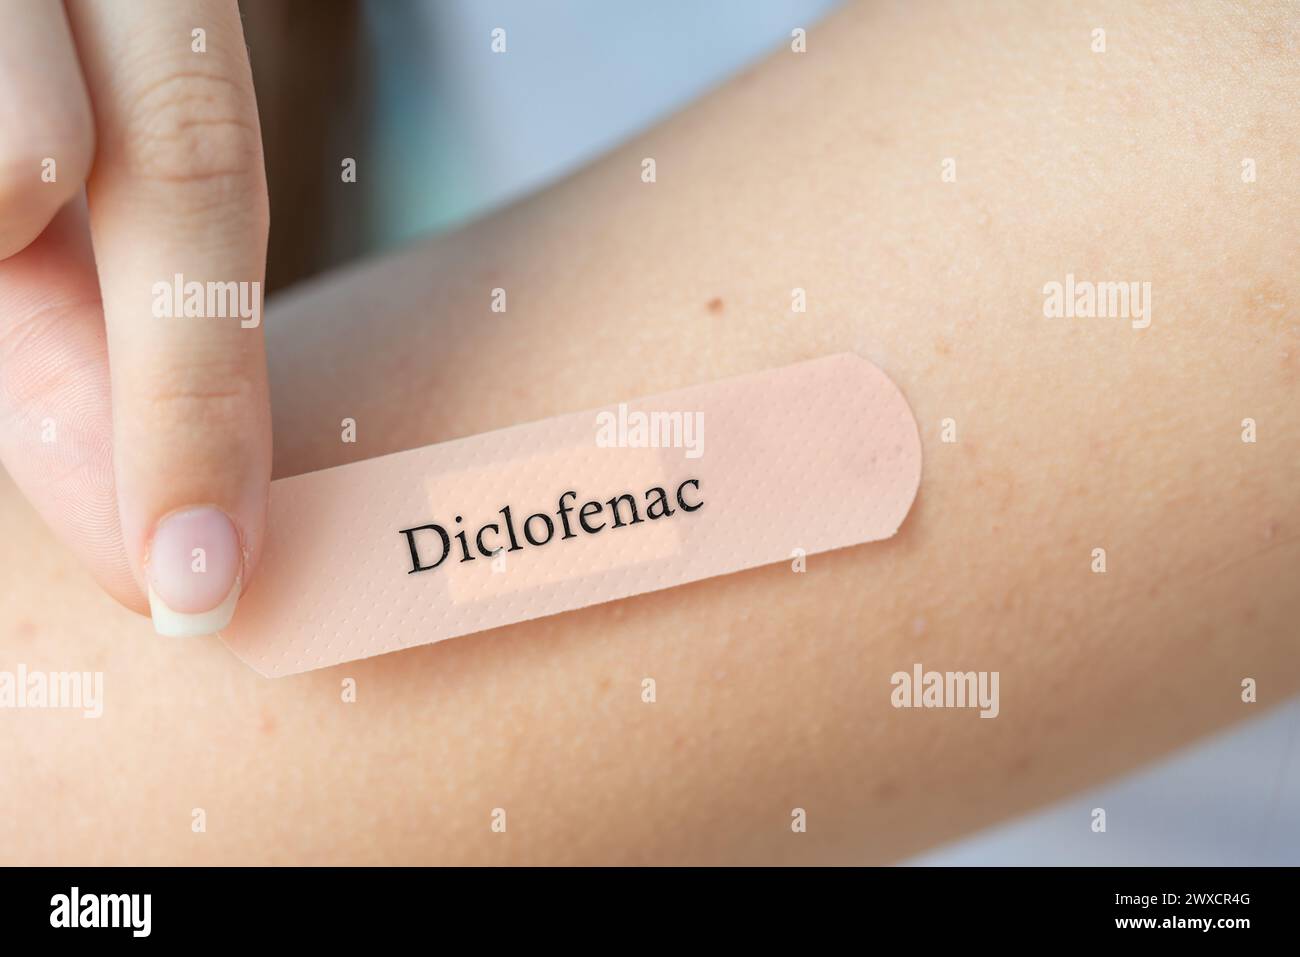 Diclofenac transdermales Pflaster, konzeptuelles Bild Stockfoto